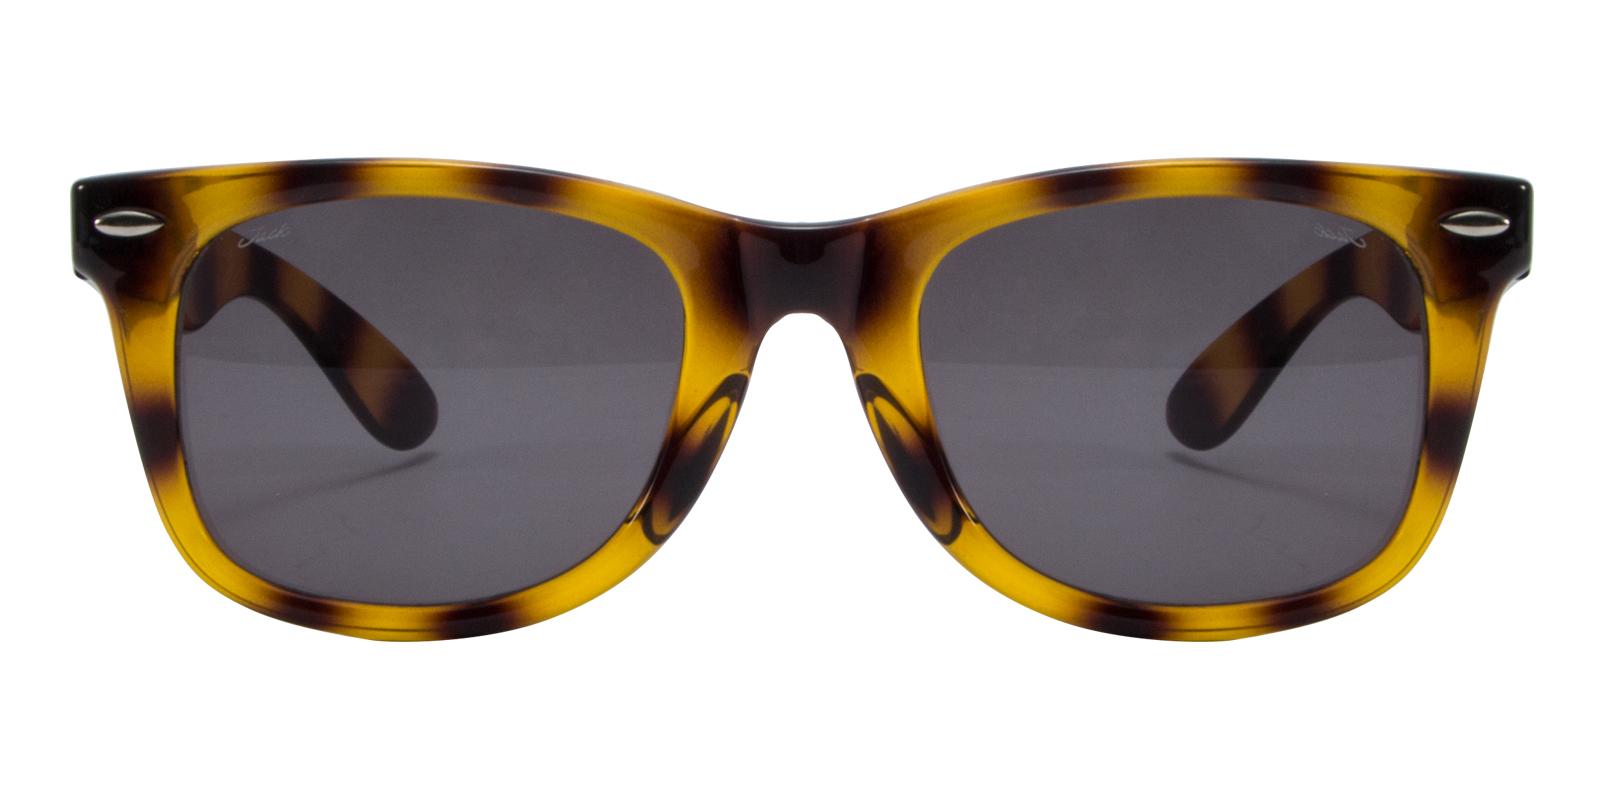 Tortoise Sunglasses